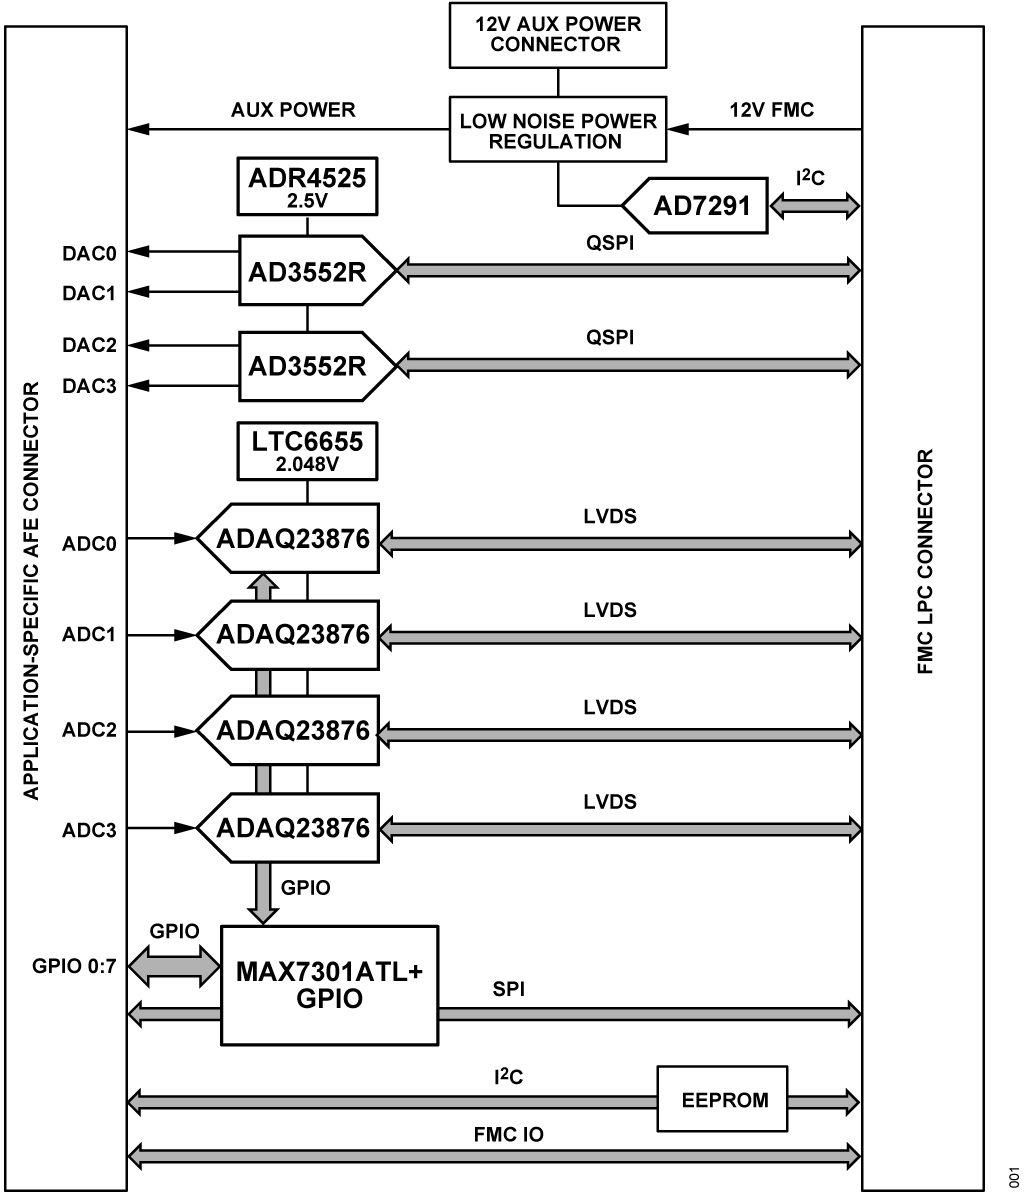 Figure 1. CN0585 Simplified Block Diagram